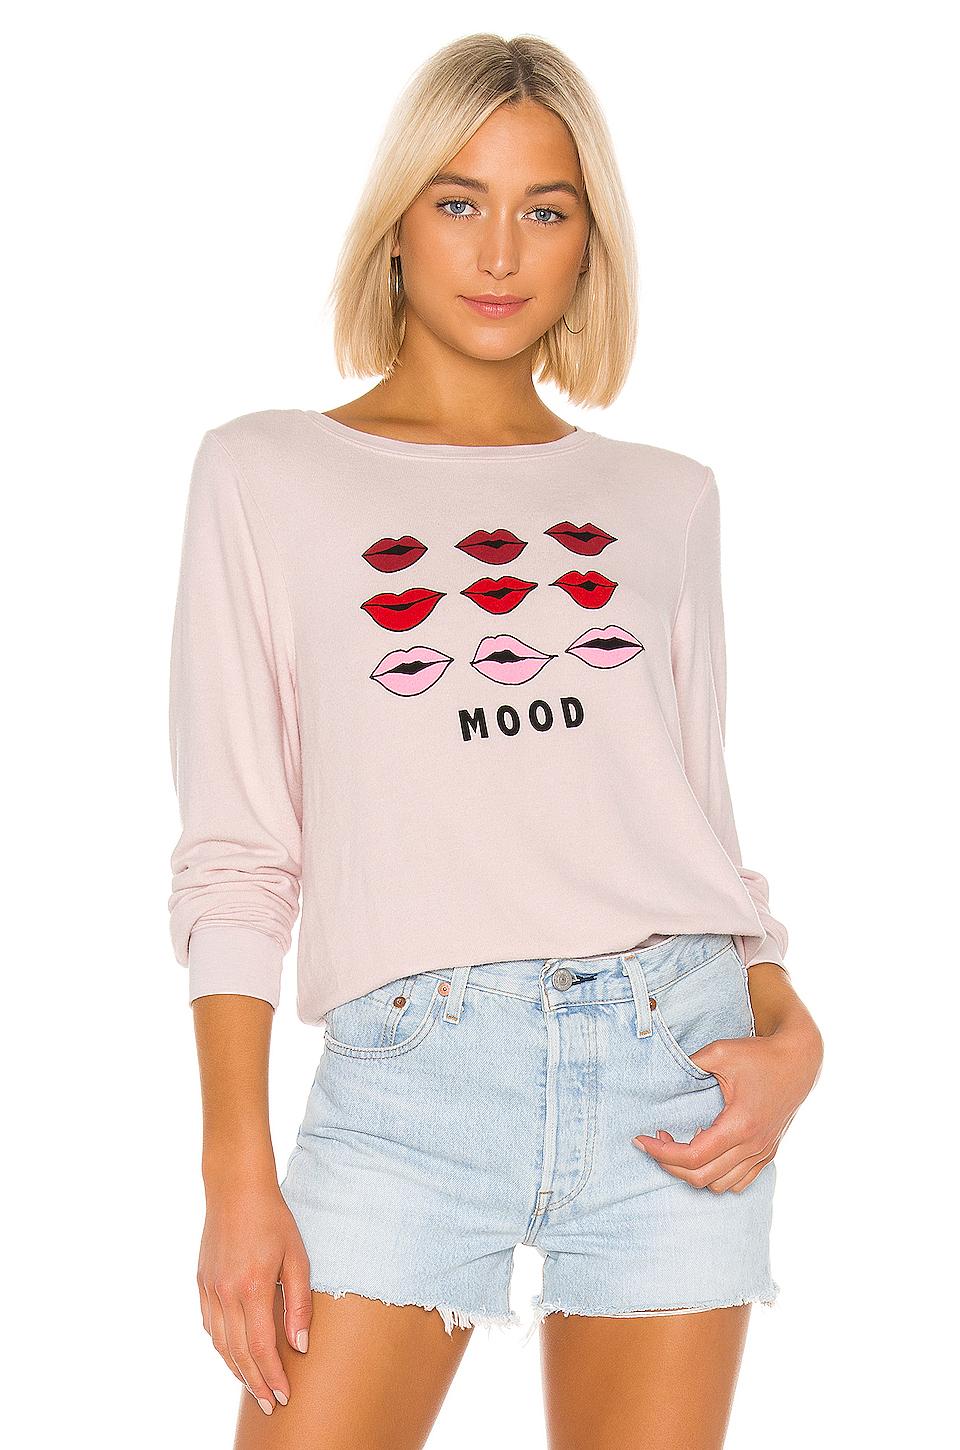 Wildfox Moody Lips Baggy Beach Sweatshirt in Rose (Pink) - Lyst